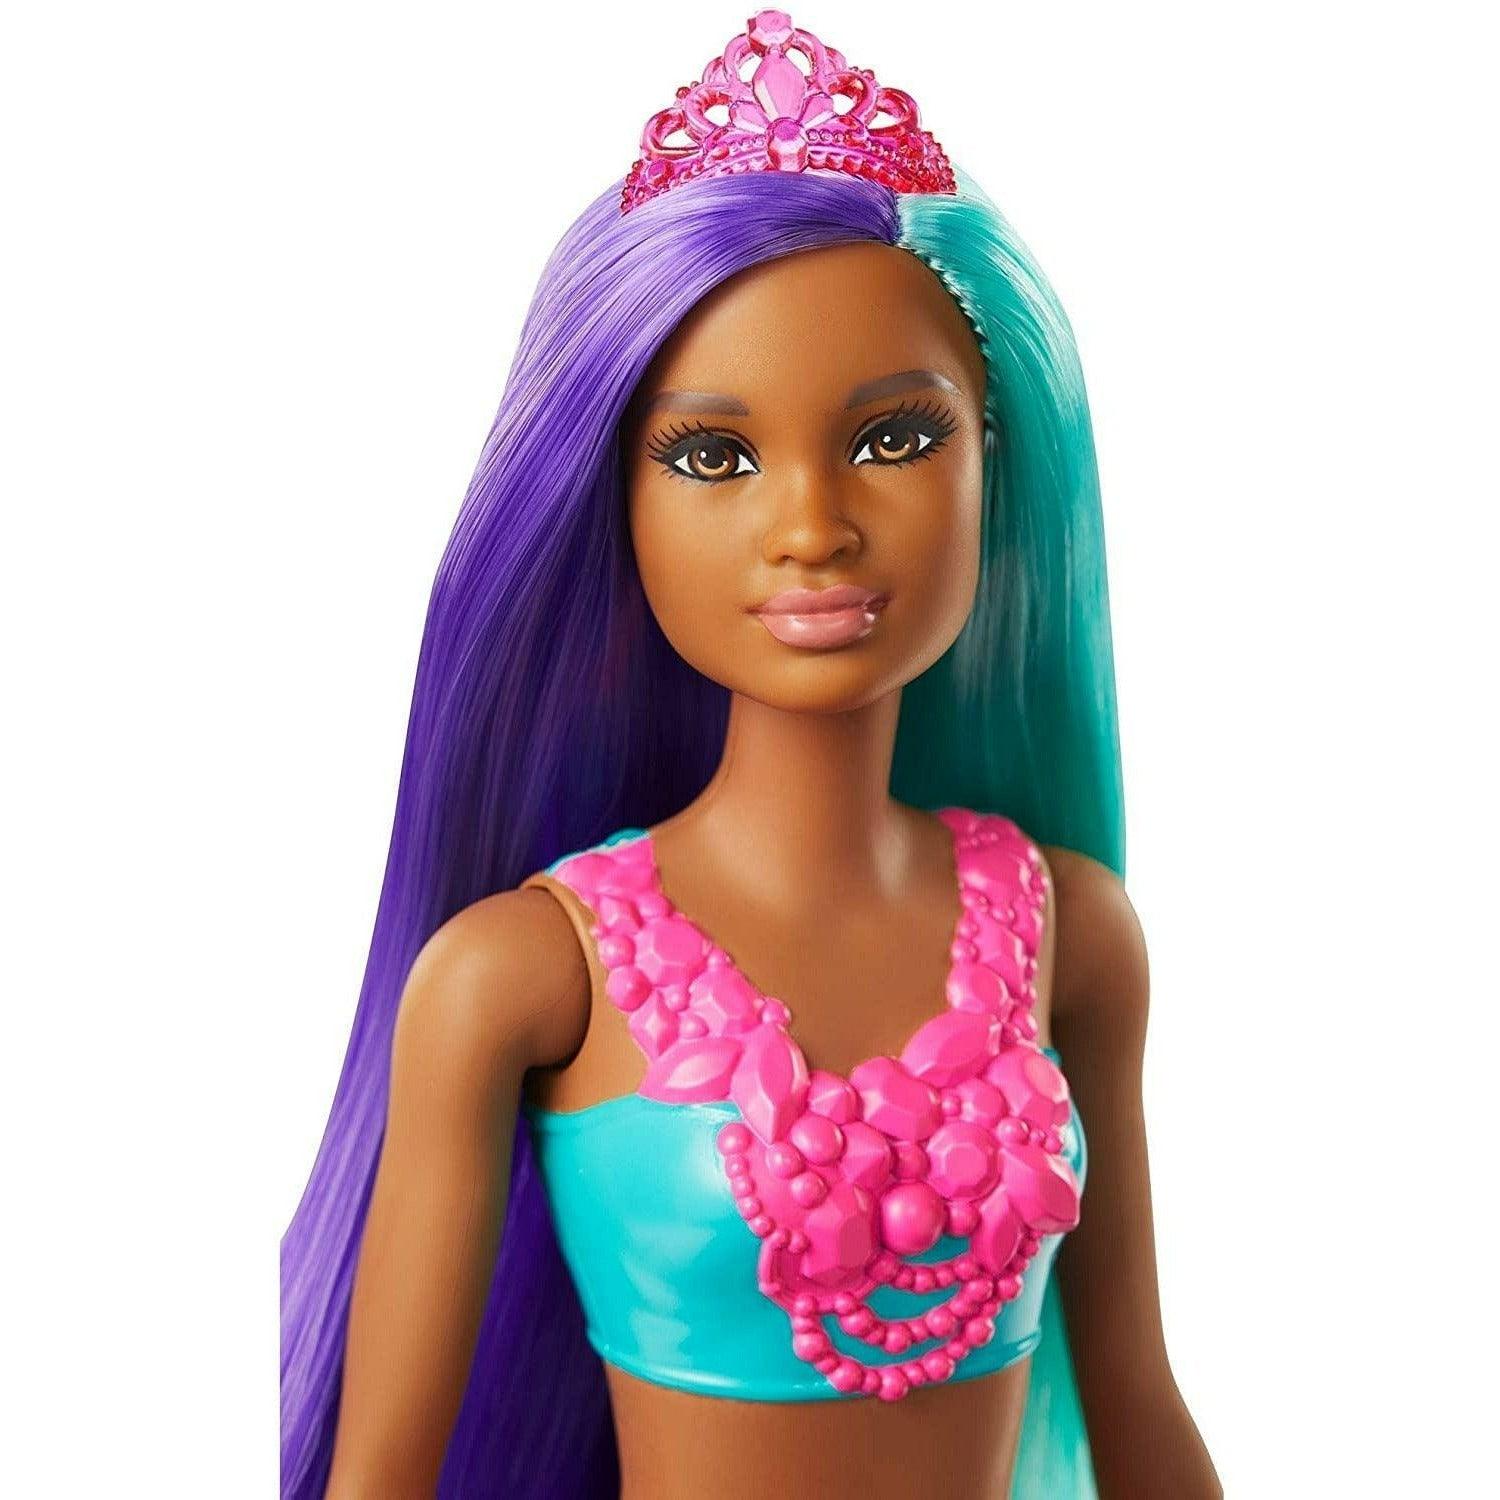 Barbie Dreamtopia Mermaid Doll, 12-inch, Teal and Purple Hair - BumbleToys - 5-7 Years, Barbie, Fashion Dolls & Accessories, Girls, Mermaid, Pre-Order